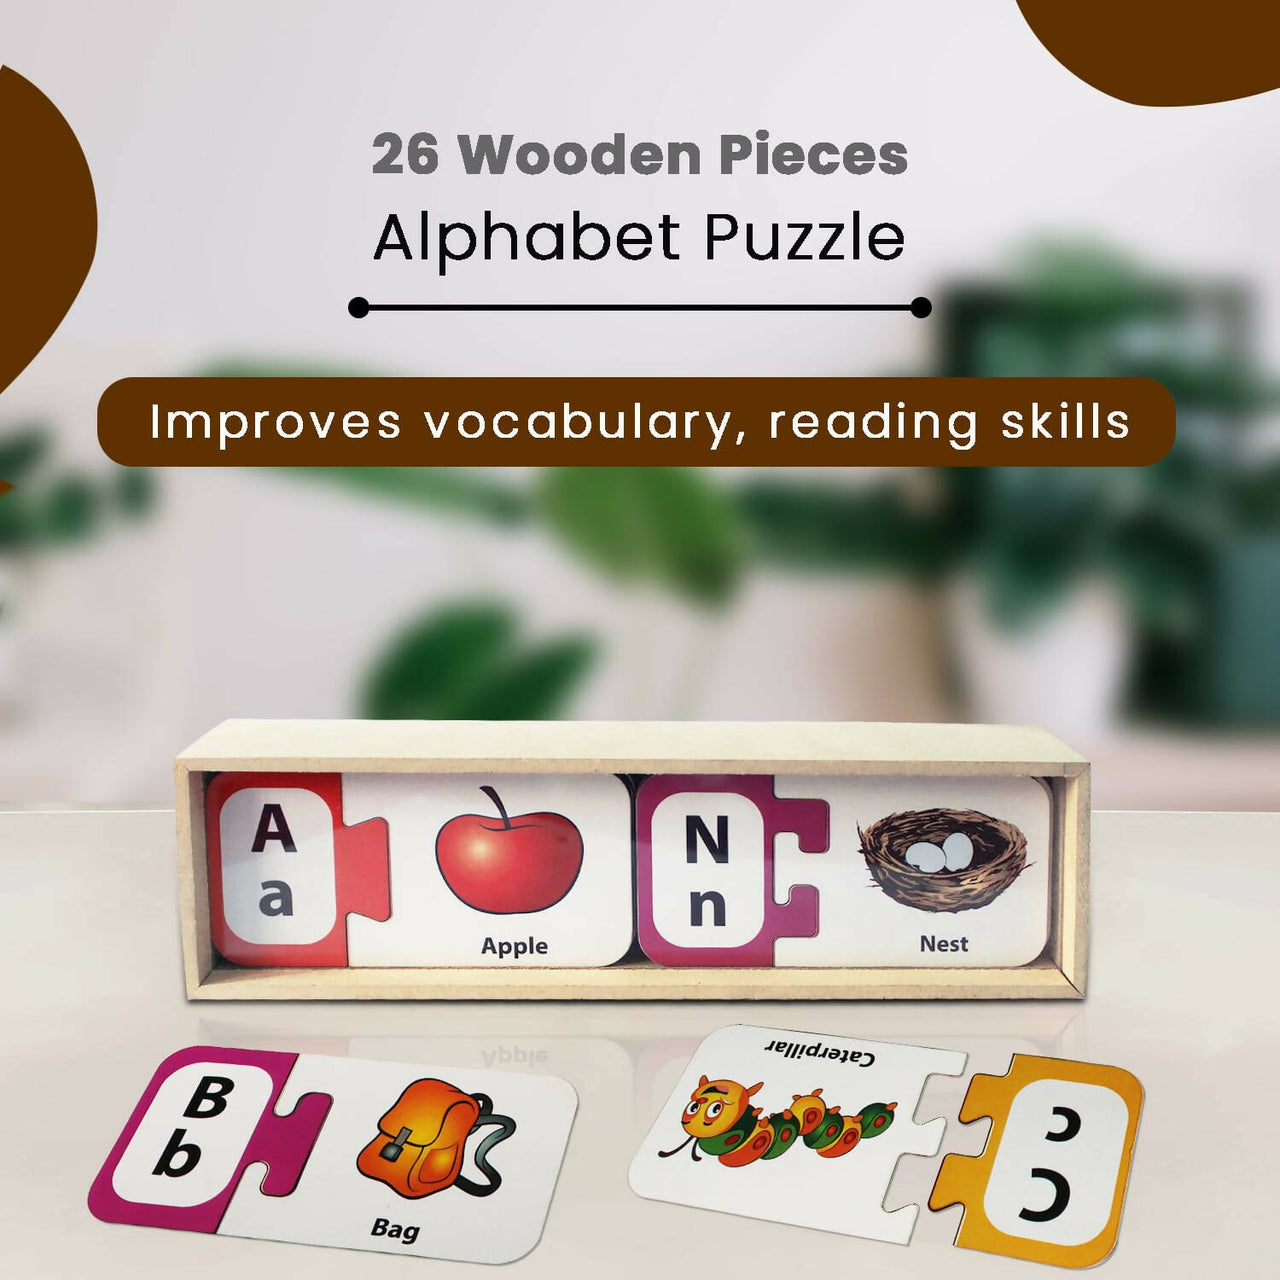 Matoyi Alphabet Puzzle For Kids - Distacart